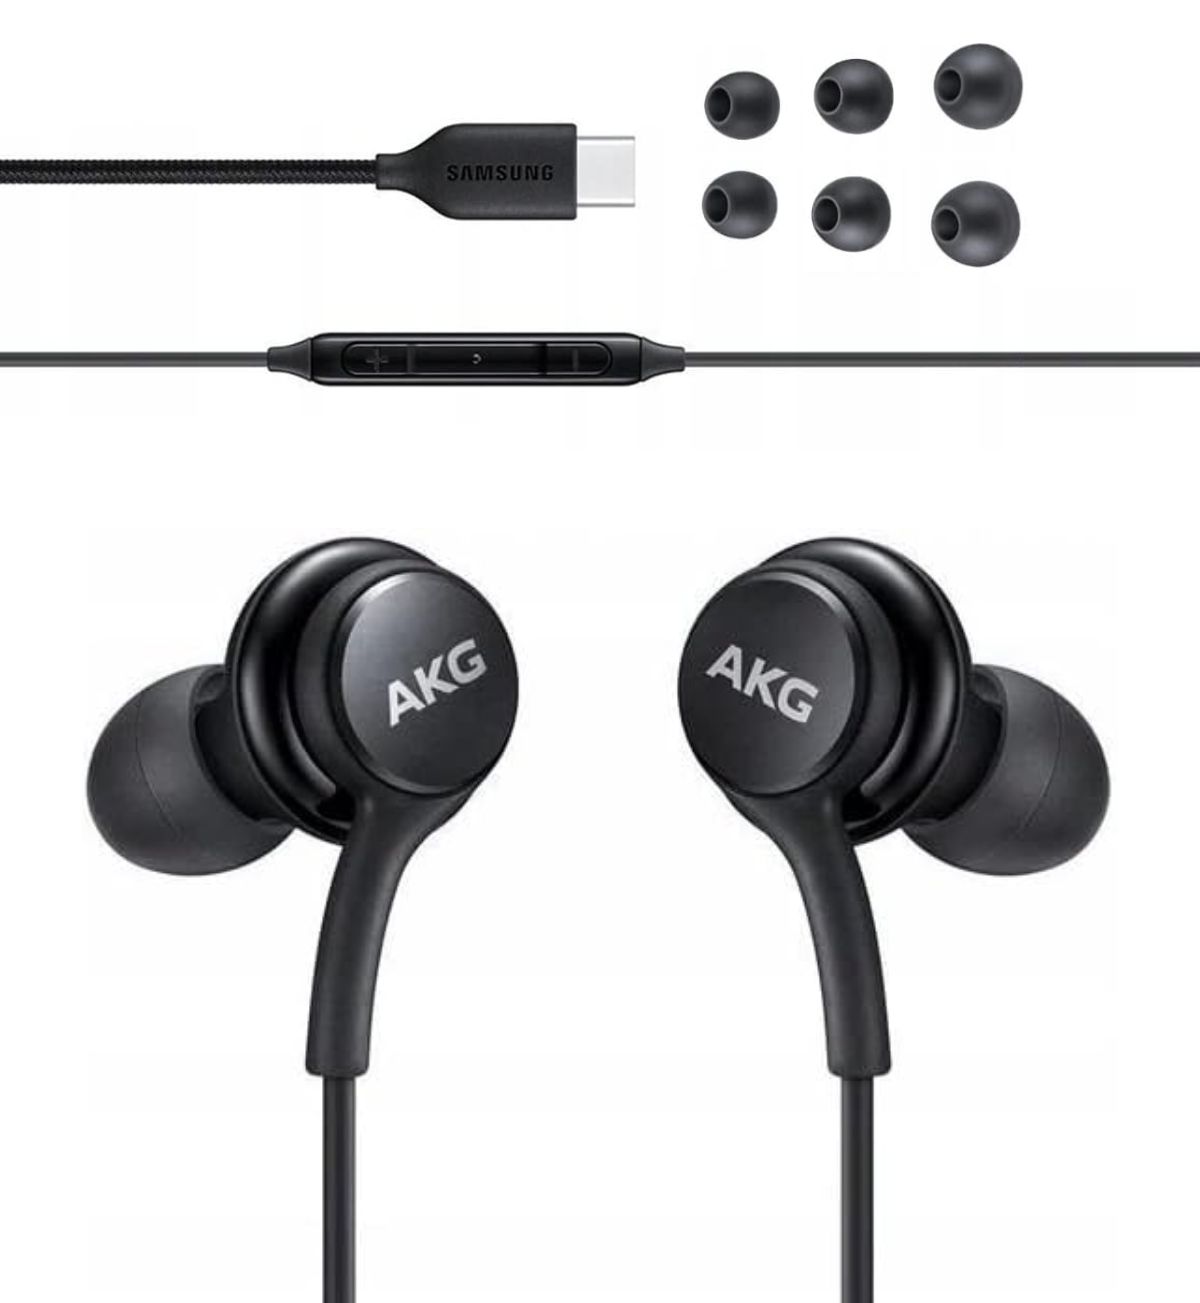 Image of Samsung AKG Type C Earphones Samsung AKG Type-C Earphones with black cable and earbuds.